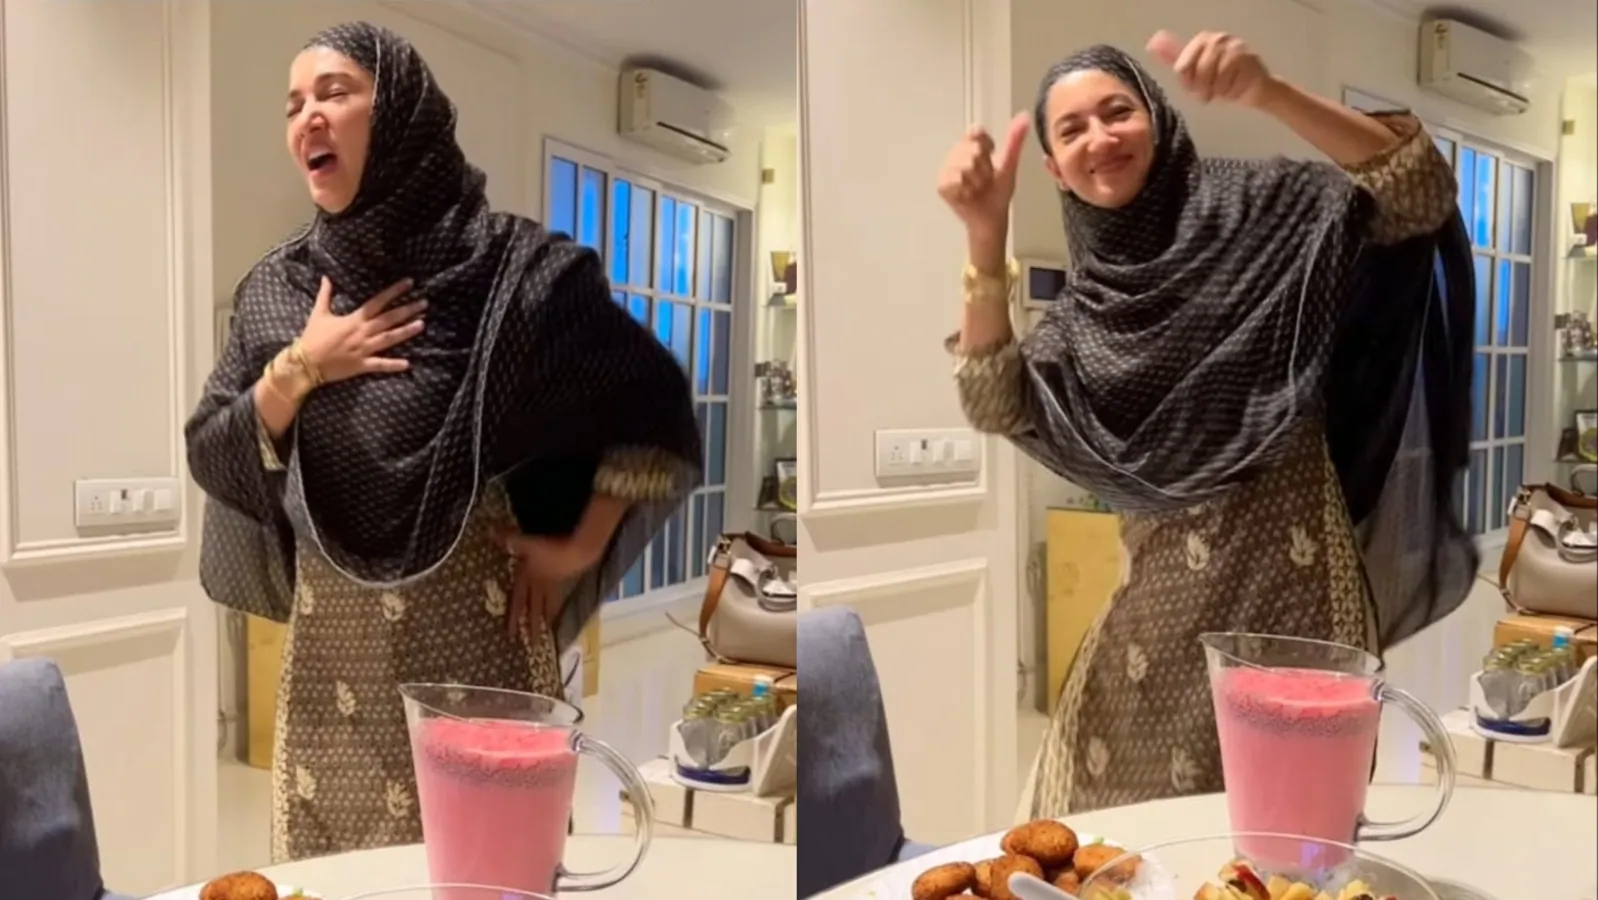 Gauahar Khan shares funny ‘expectations vs reality’ video on fasting during Ramadan while avoiding treats